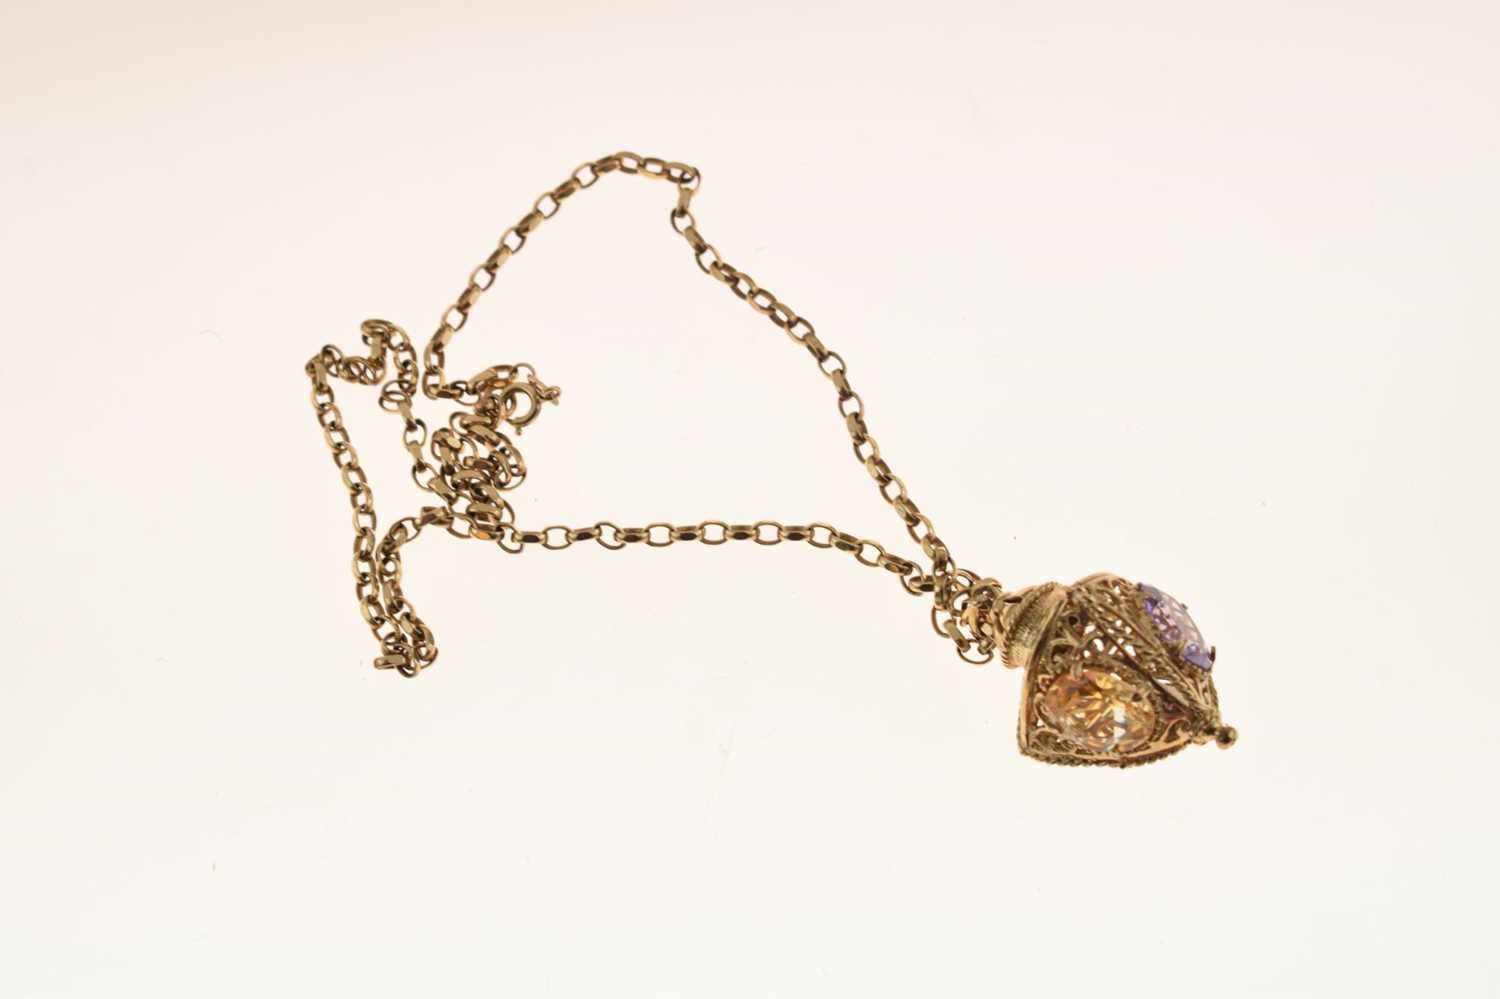 9ct gold quartz set lamp pendant on chain - Image 2 of 8